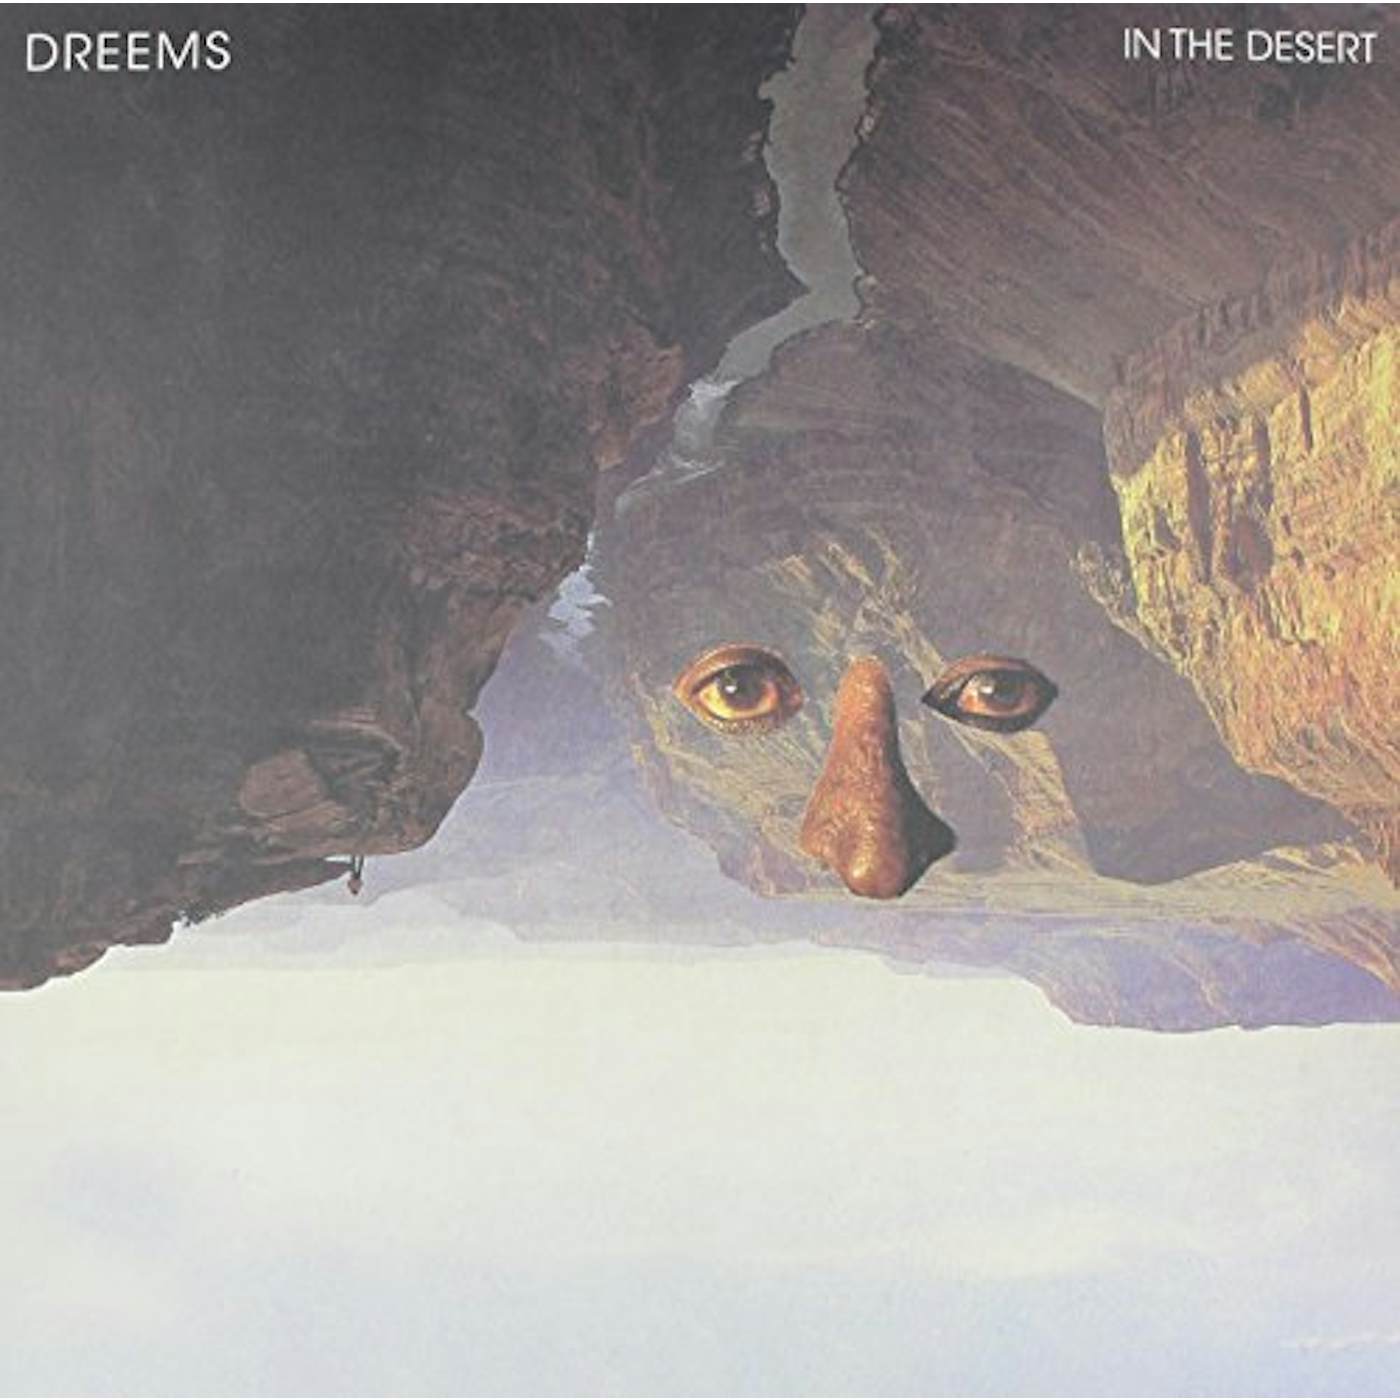 Dreems IN THE DESERT REMIXES Vinyl Record